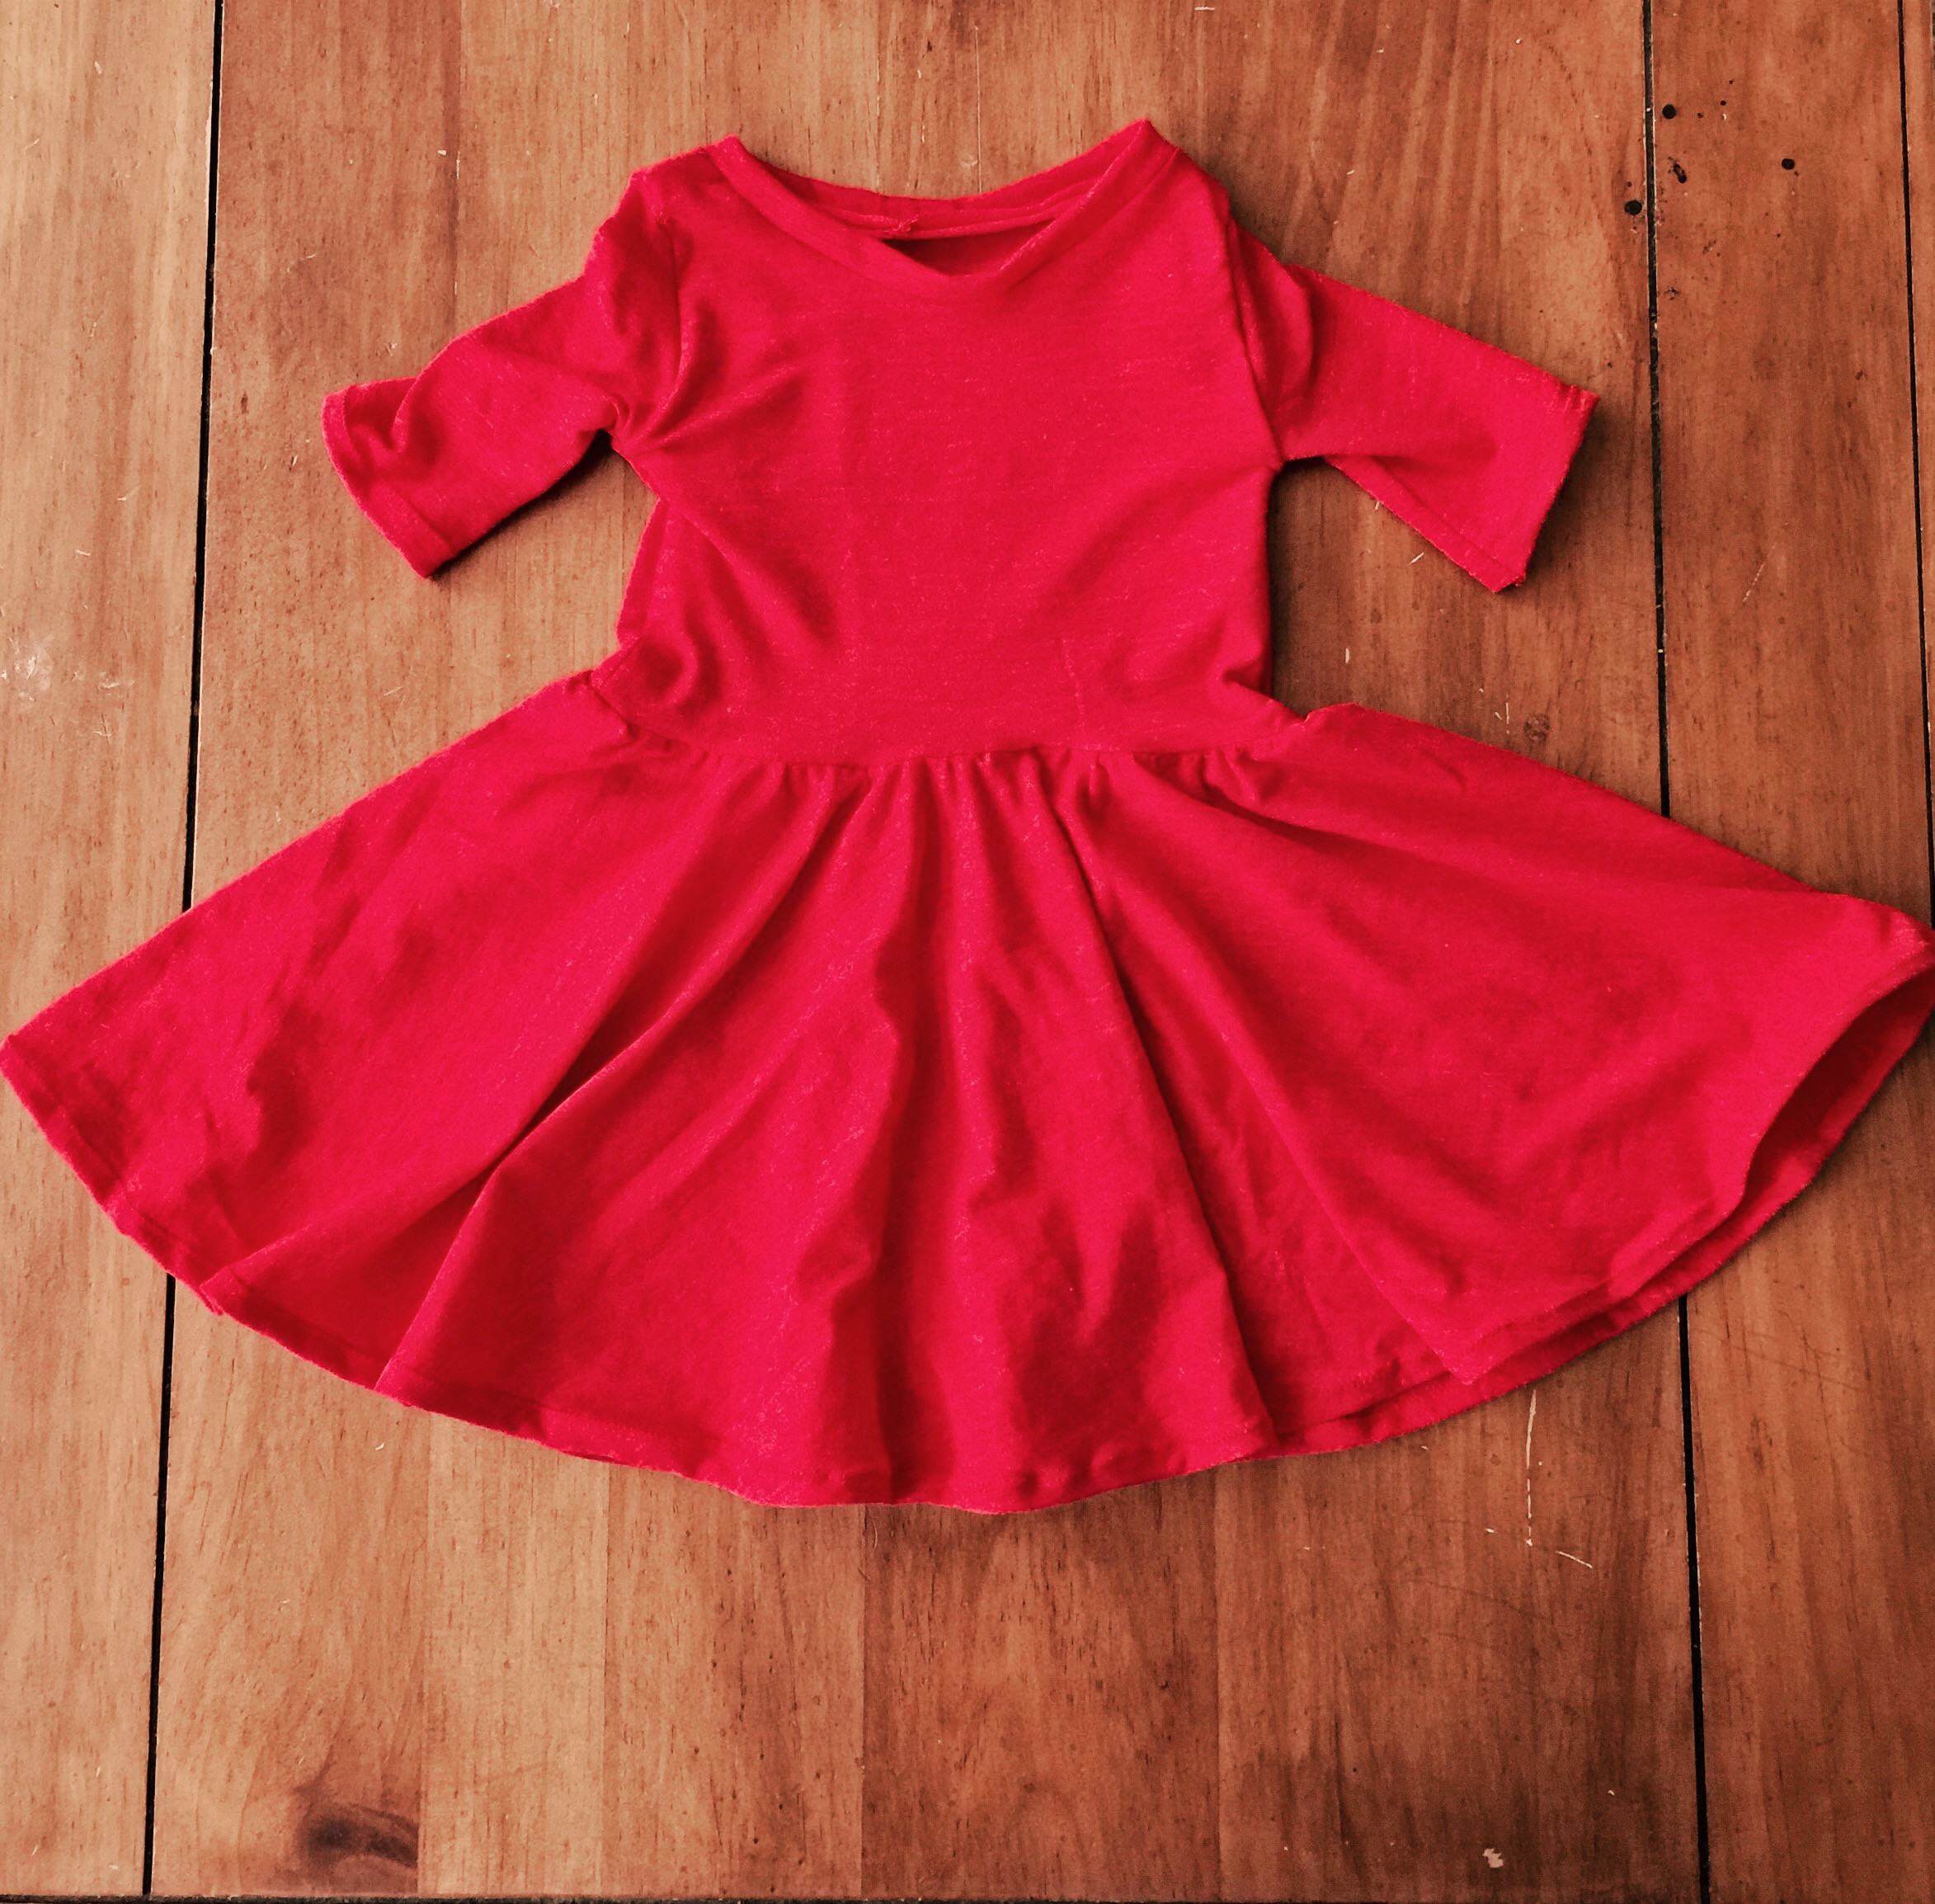 DIY Toddler Dresses
 DIY Toddler Dress